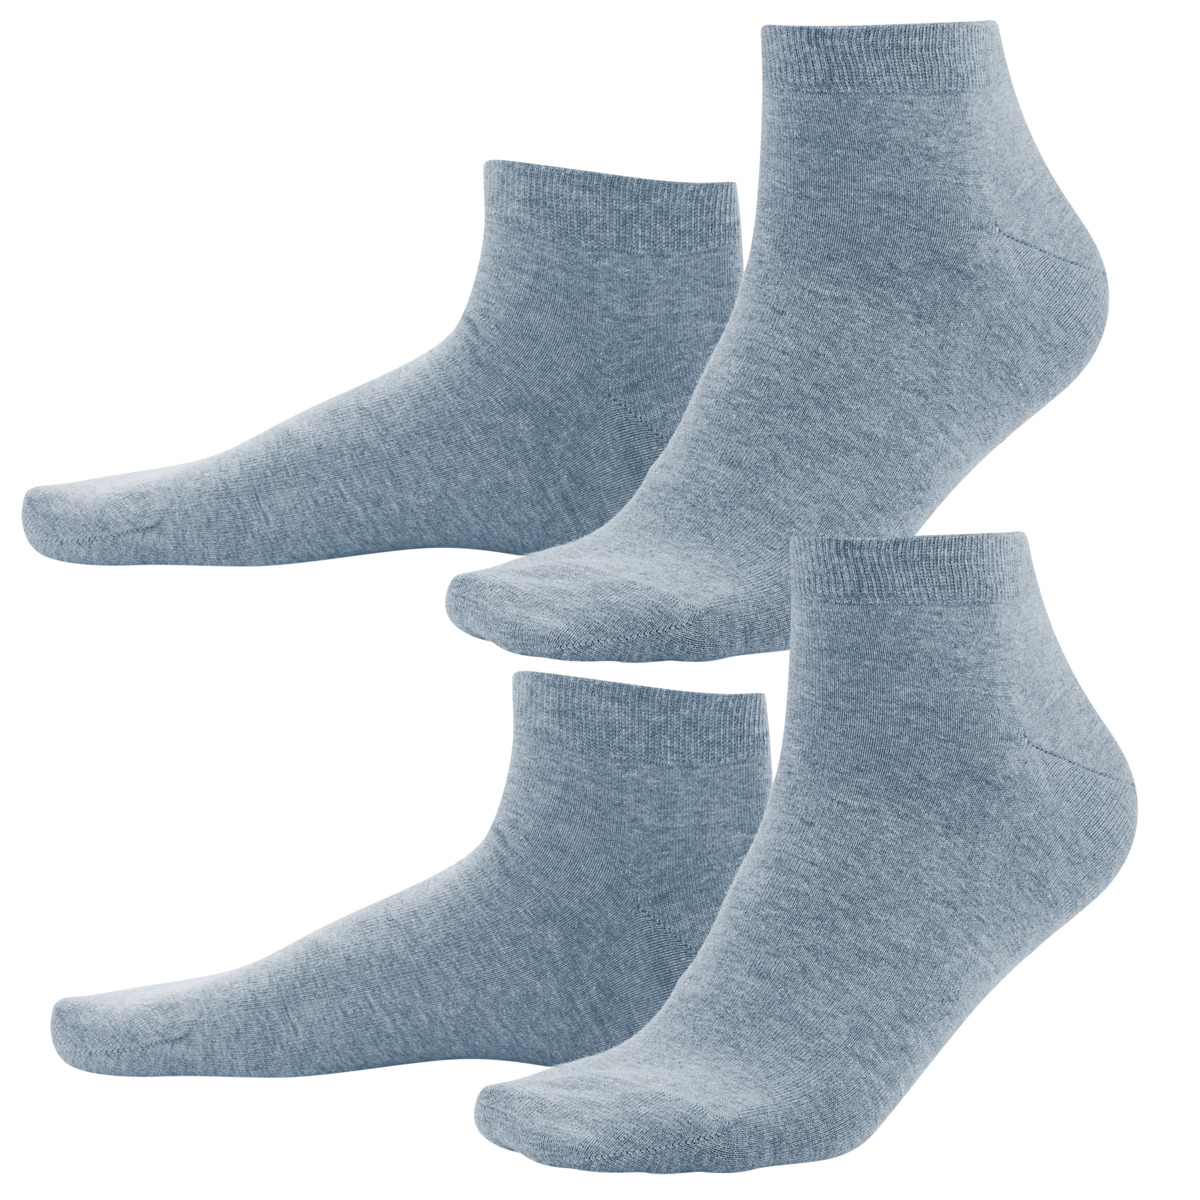 Blue Sneaker Socks, Pack of 2, CURT